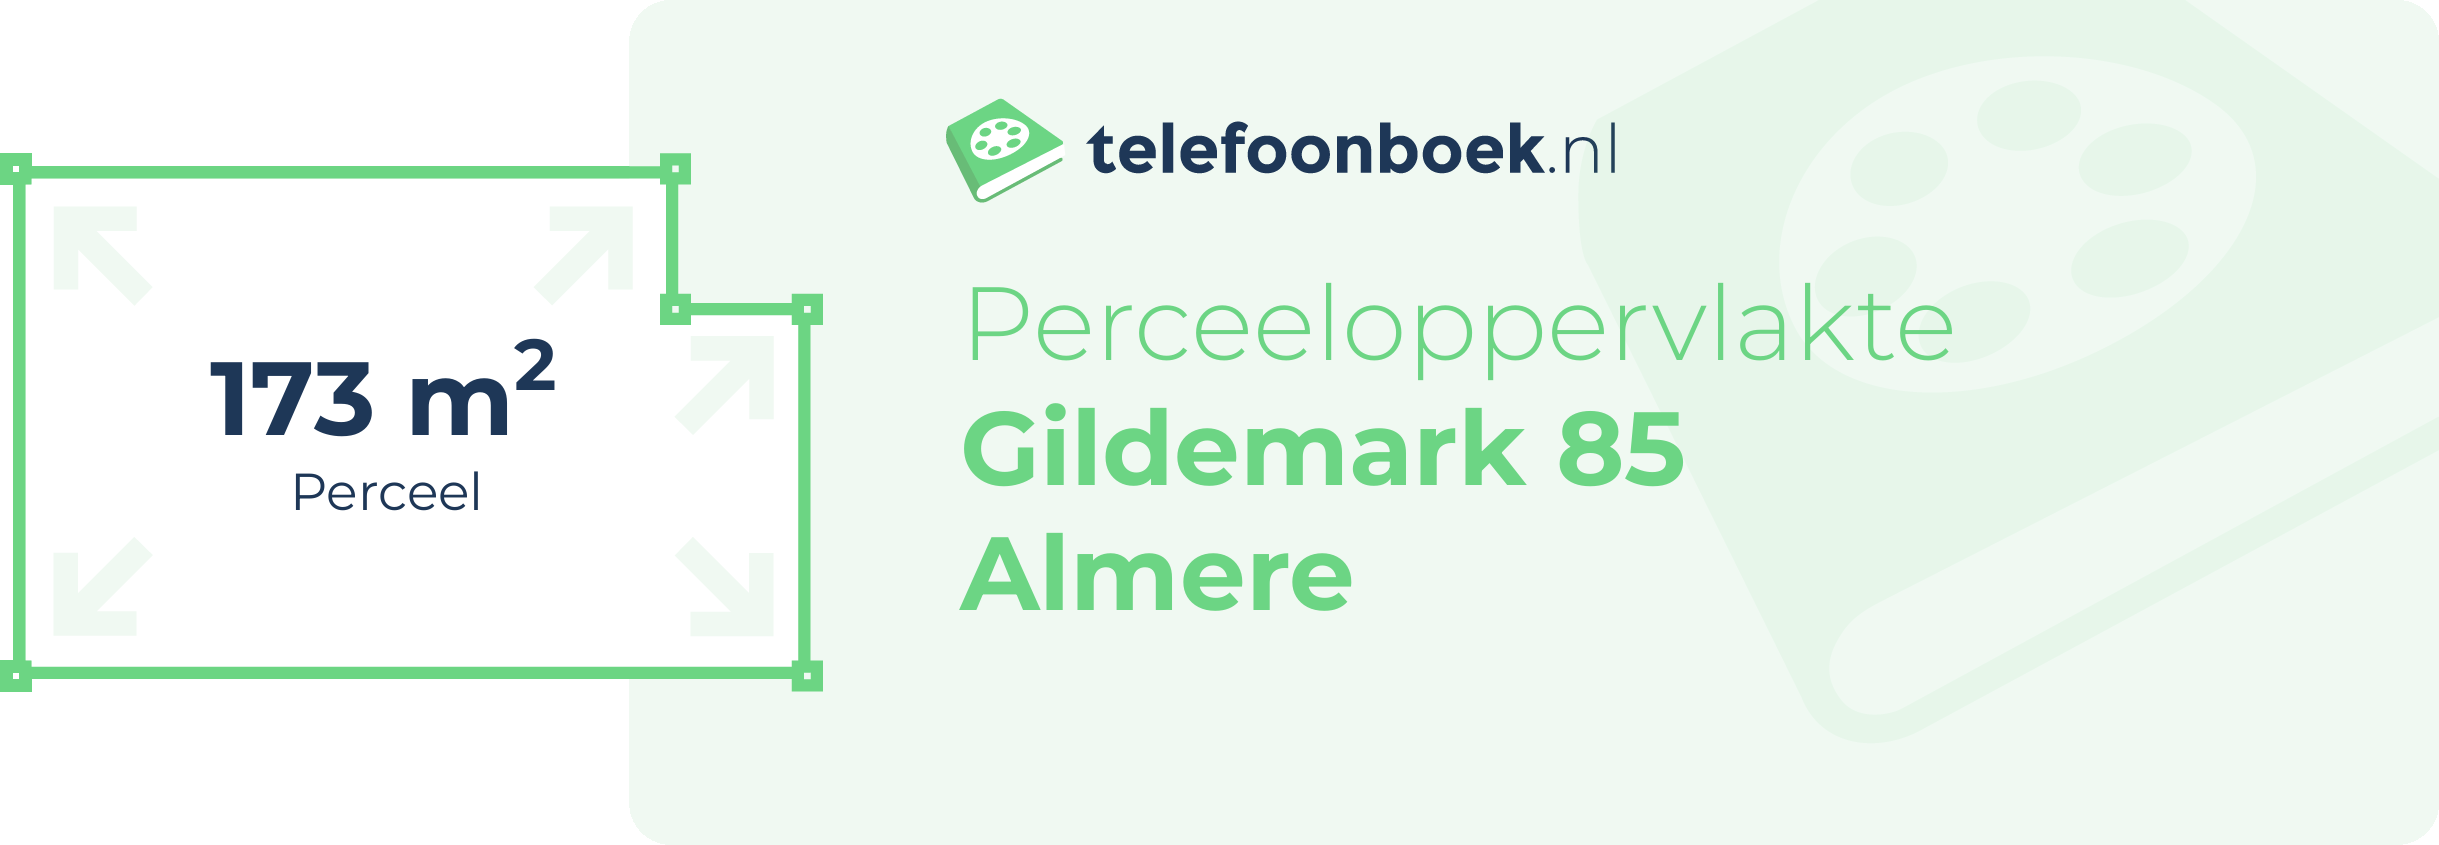 Perceeloppervlakte Gildemark 85 Almere